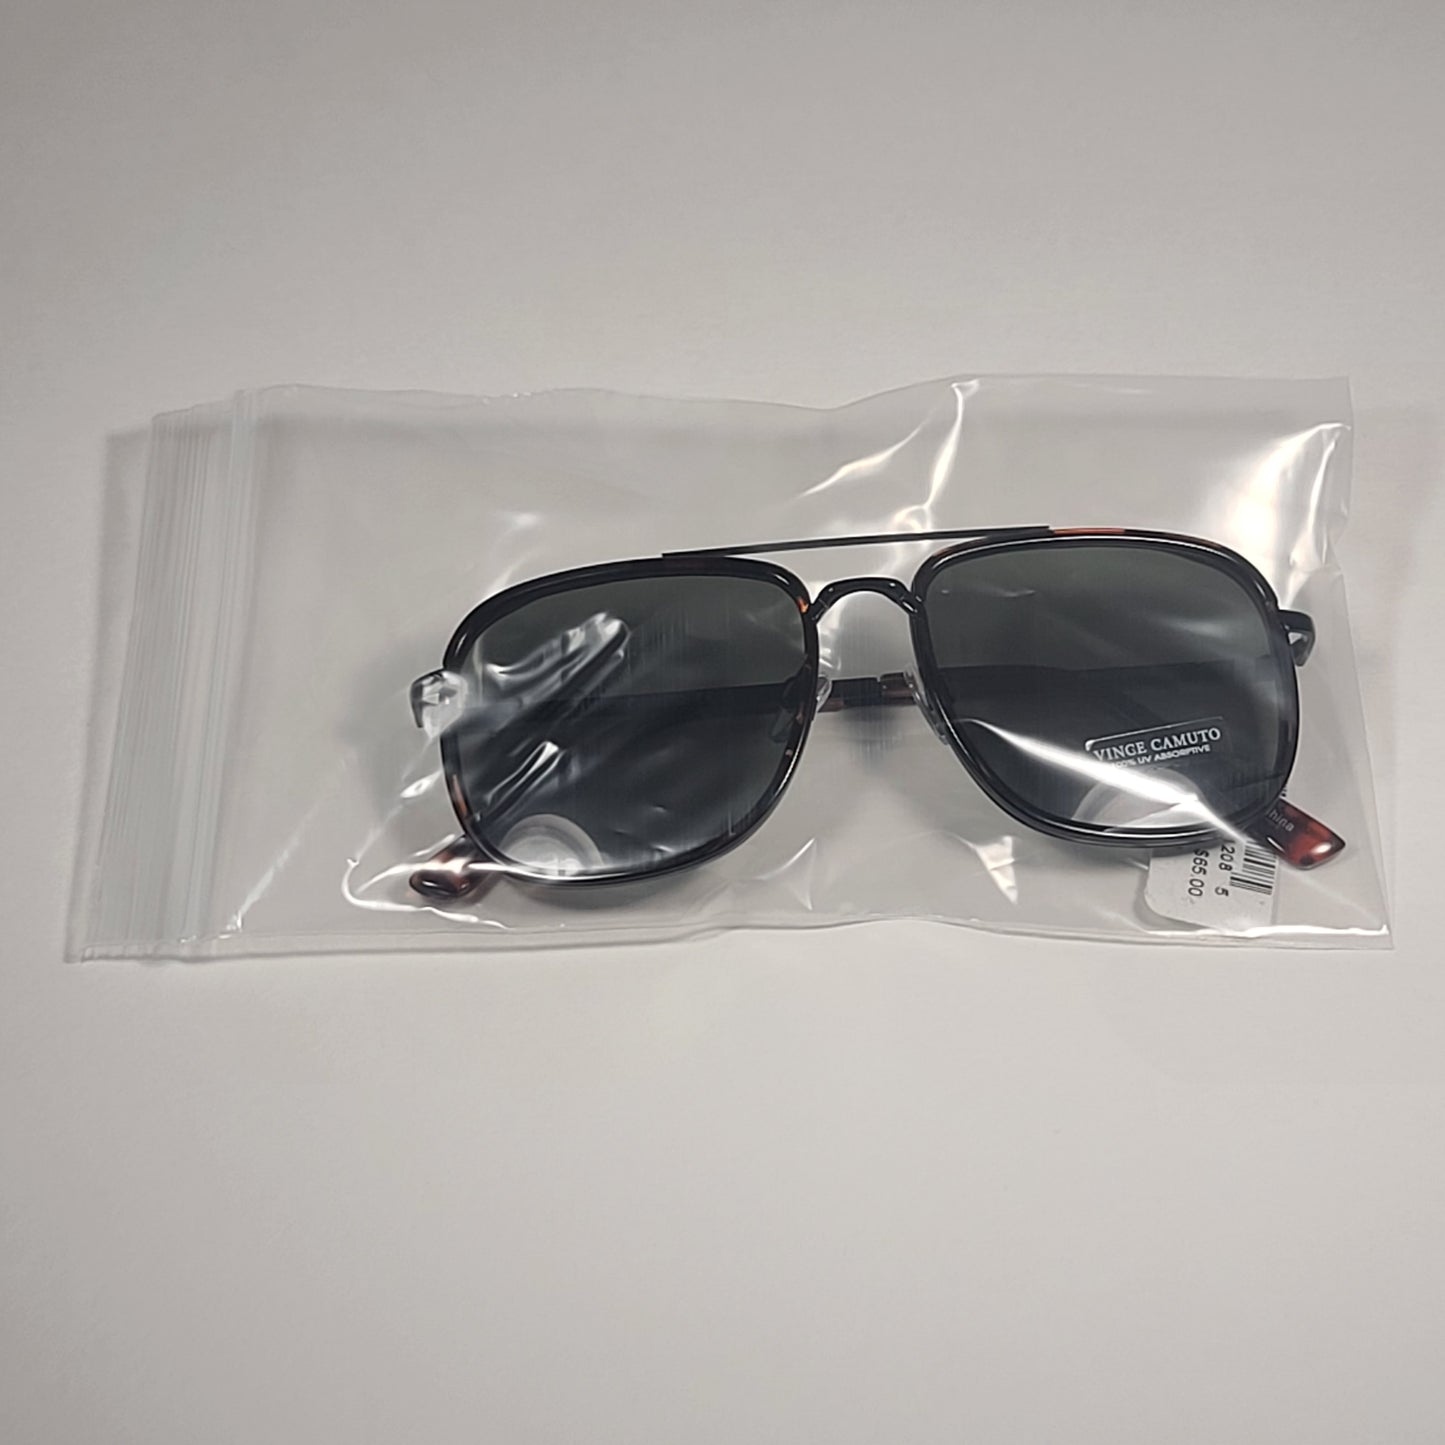 Vince Camuto VM601 BKTS Navigator Sunglasses Black Tortoise Frame Green Lens - Sunglasses